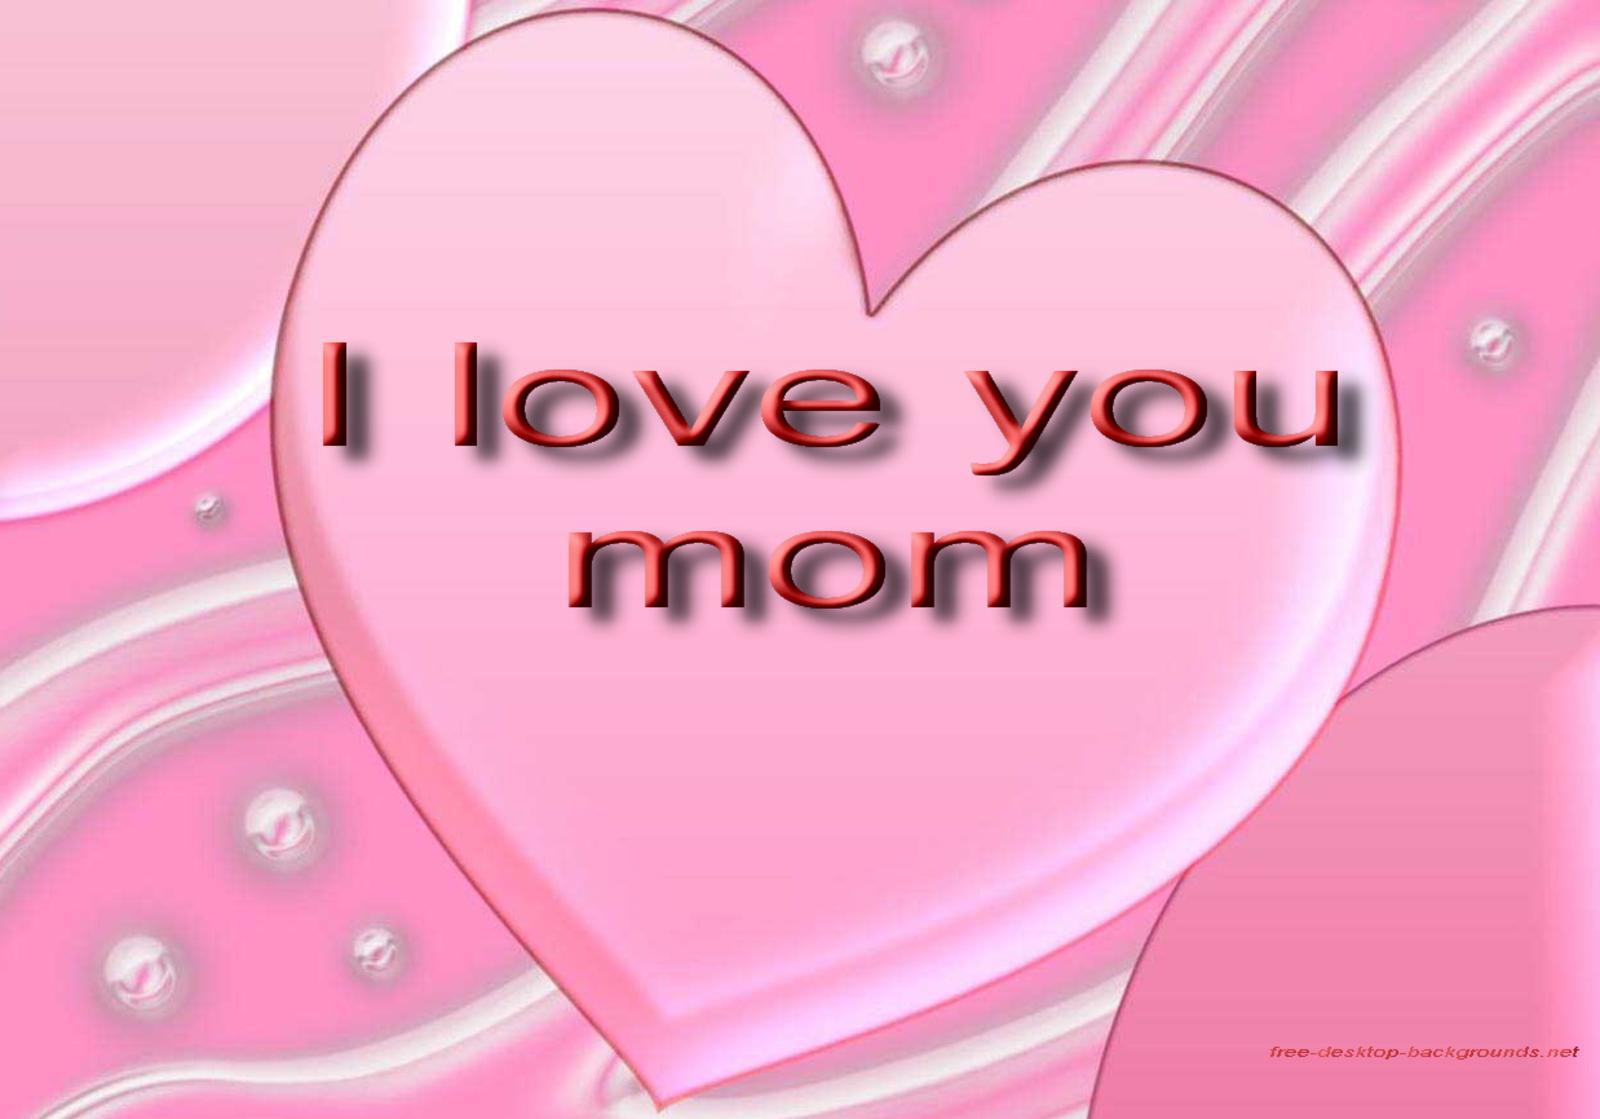 I Love You Mom Desktop image